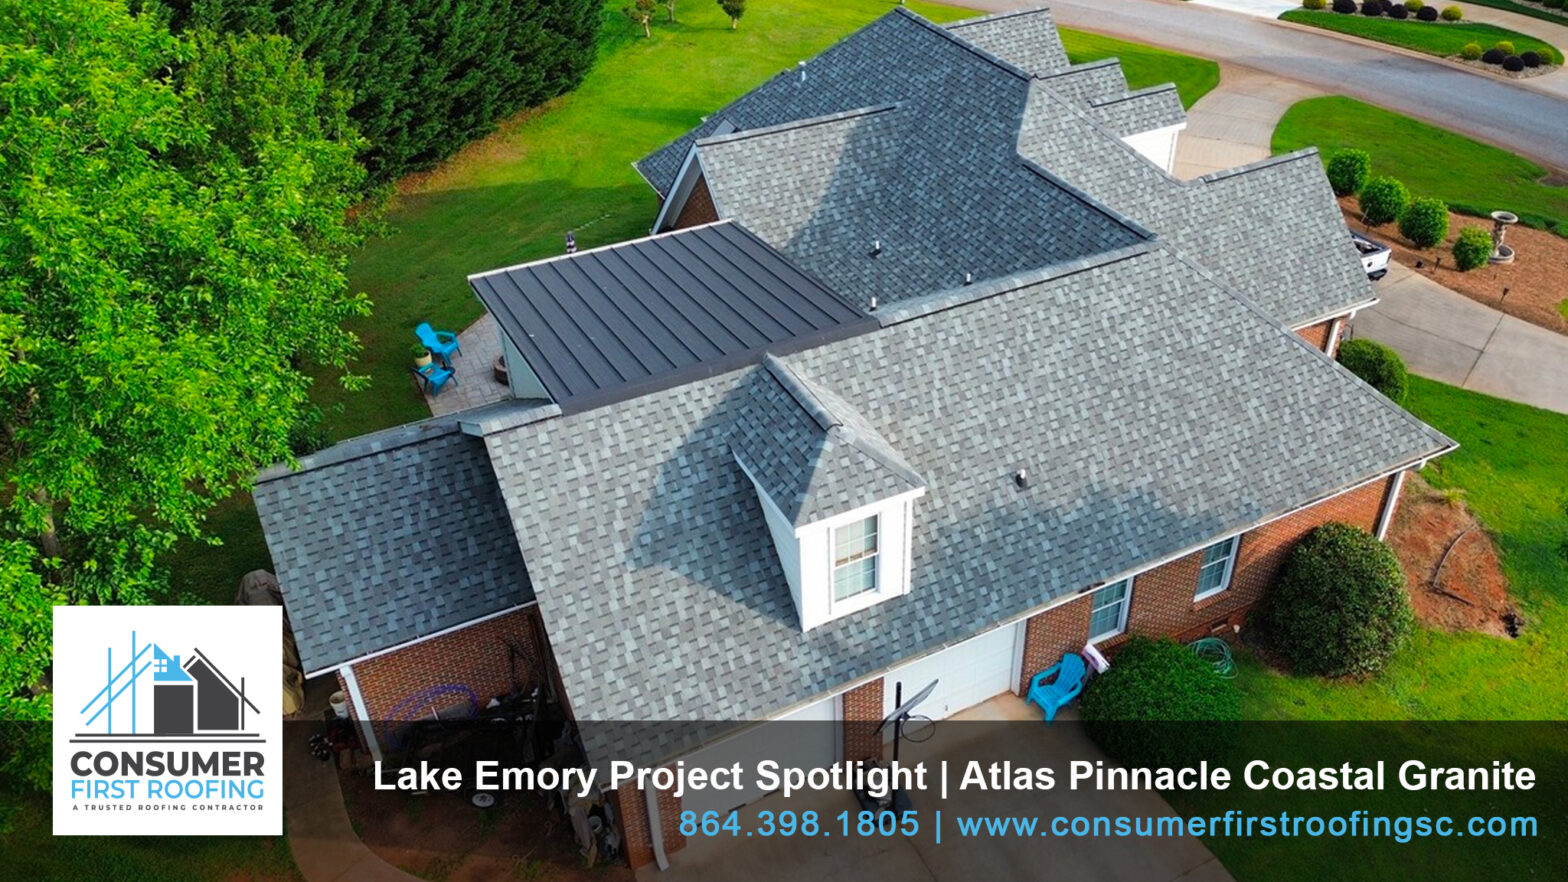 Lake Emory Project Spotlight | Atlas Pinnacle Coastal Granite